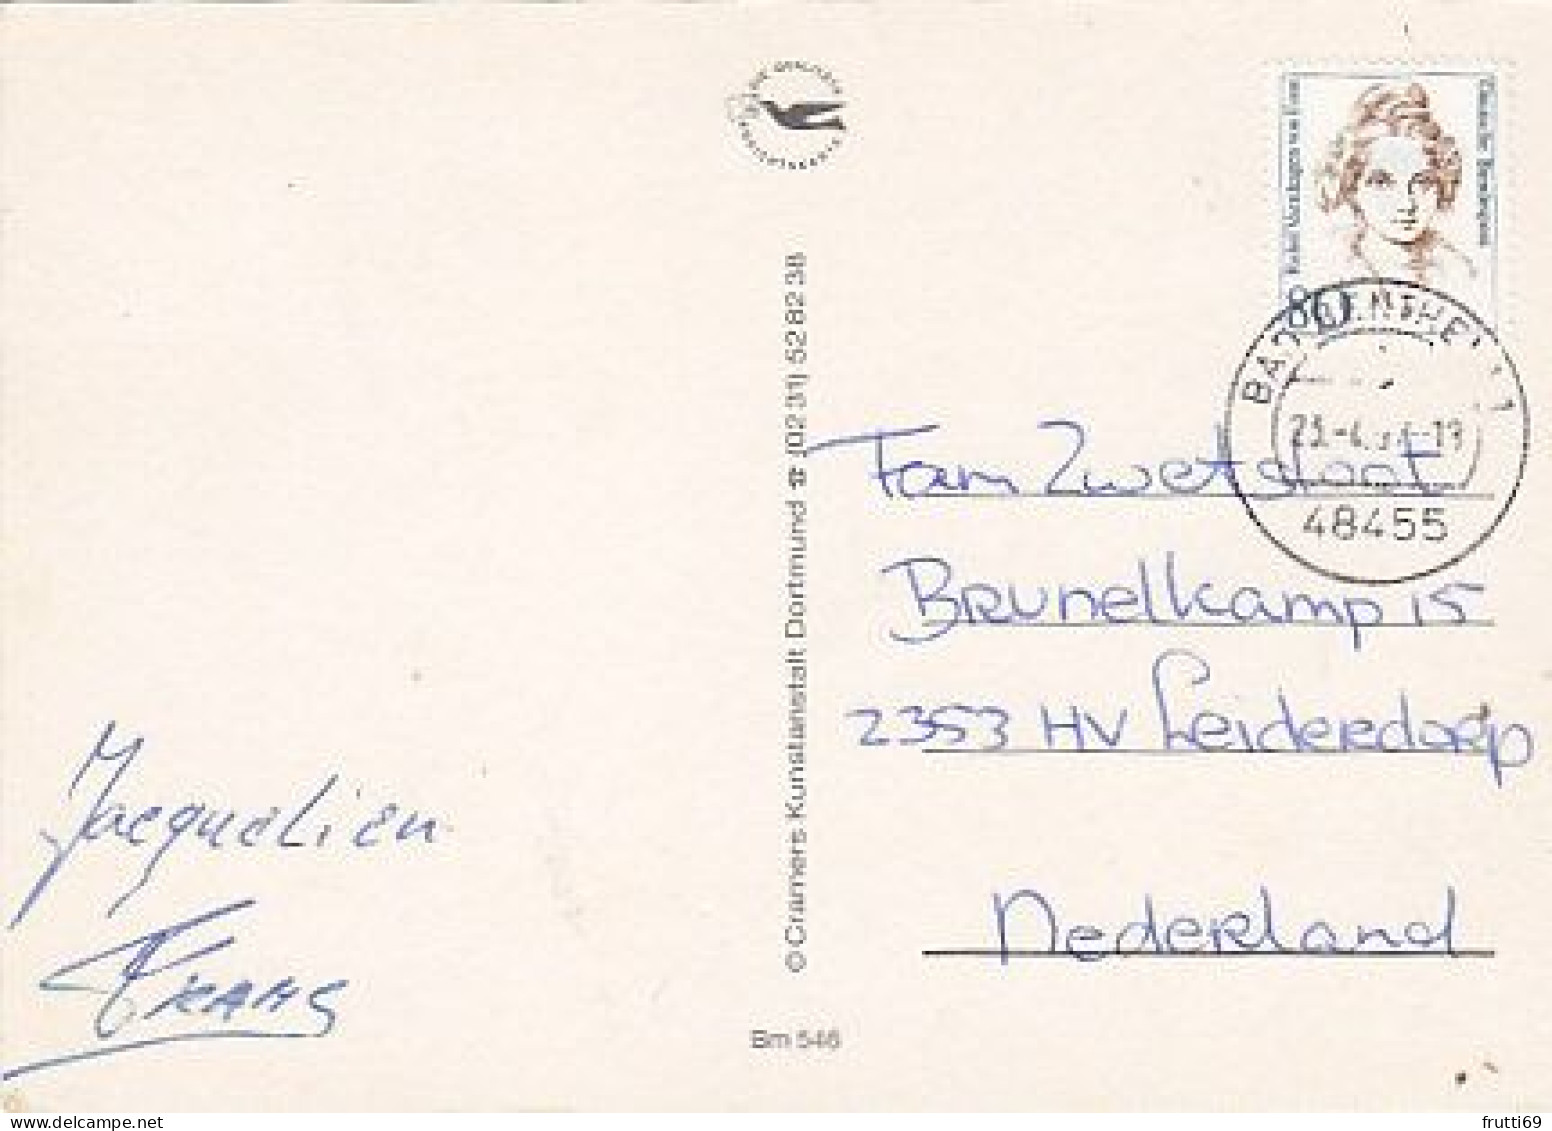 AK 192375 GERMANY - Bad Bentheim - Bad Bentheim